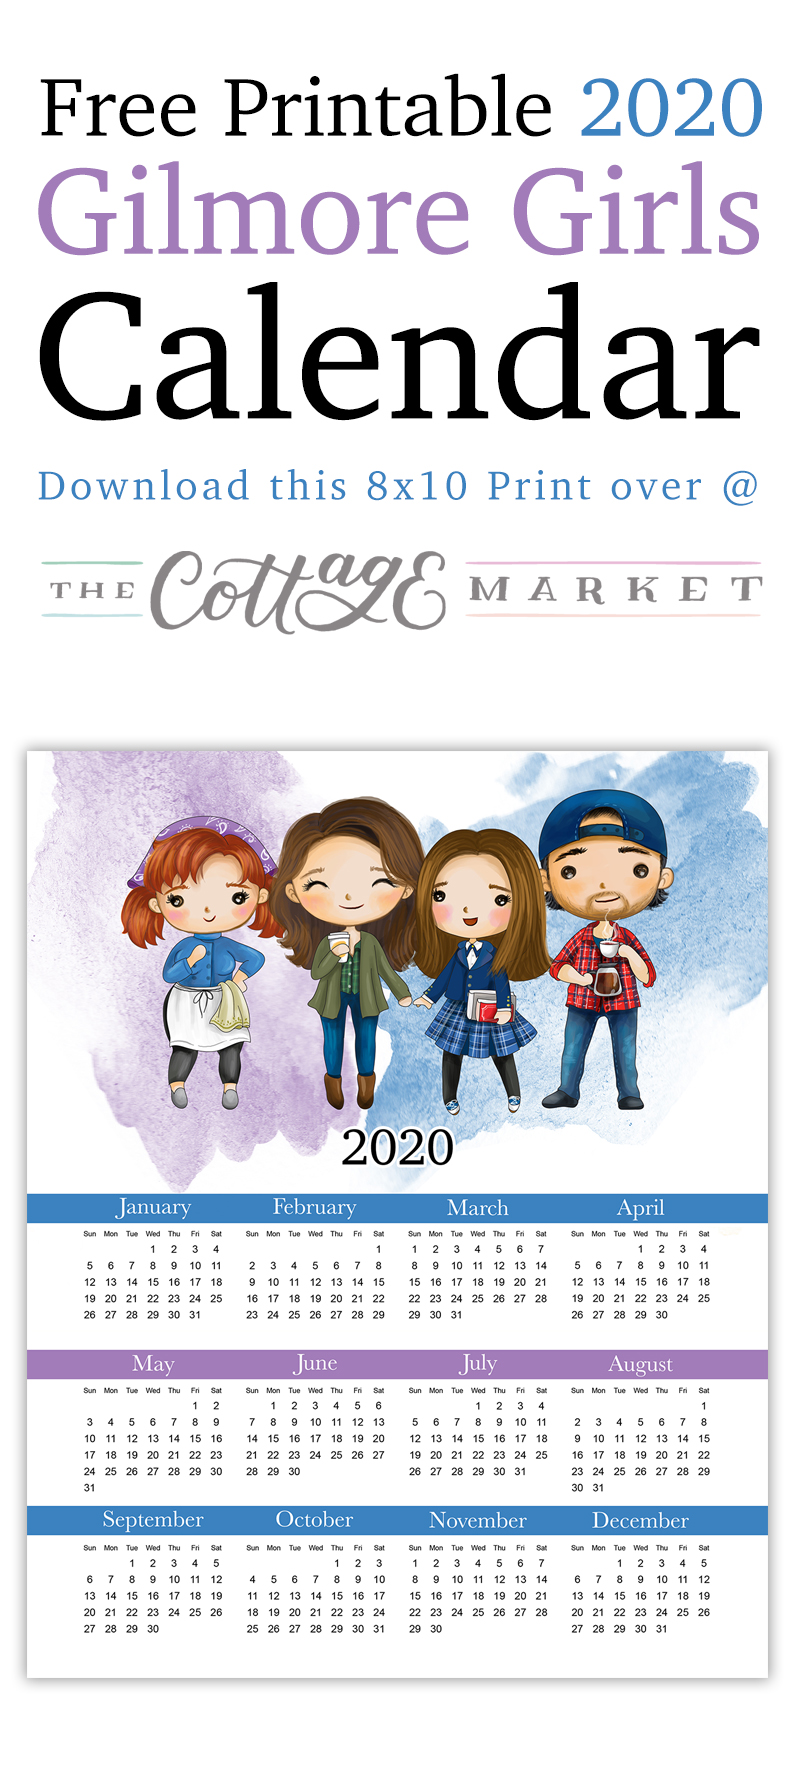 https://thecottagemarket.com/wp-content/uploads/2019/09/TCM-GG-2020-OnePage-Calendar-t-3.jpg